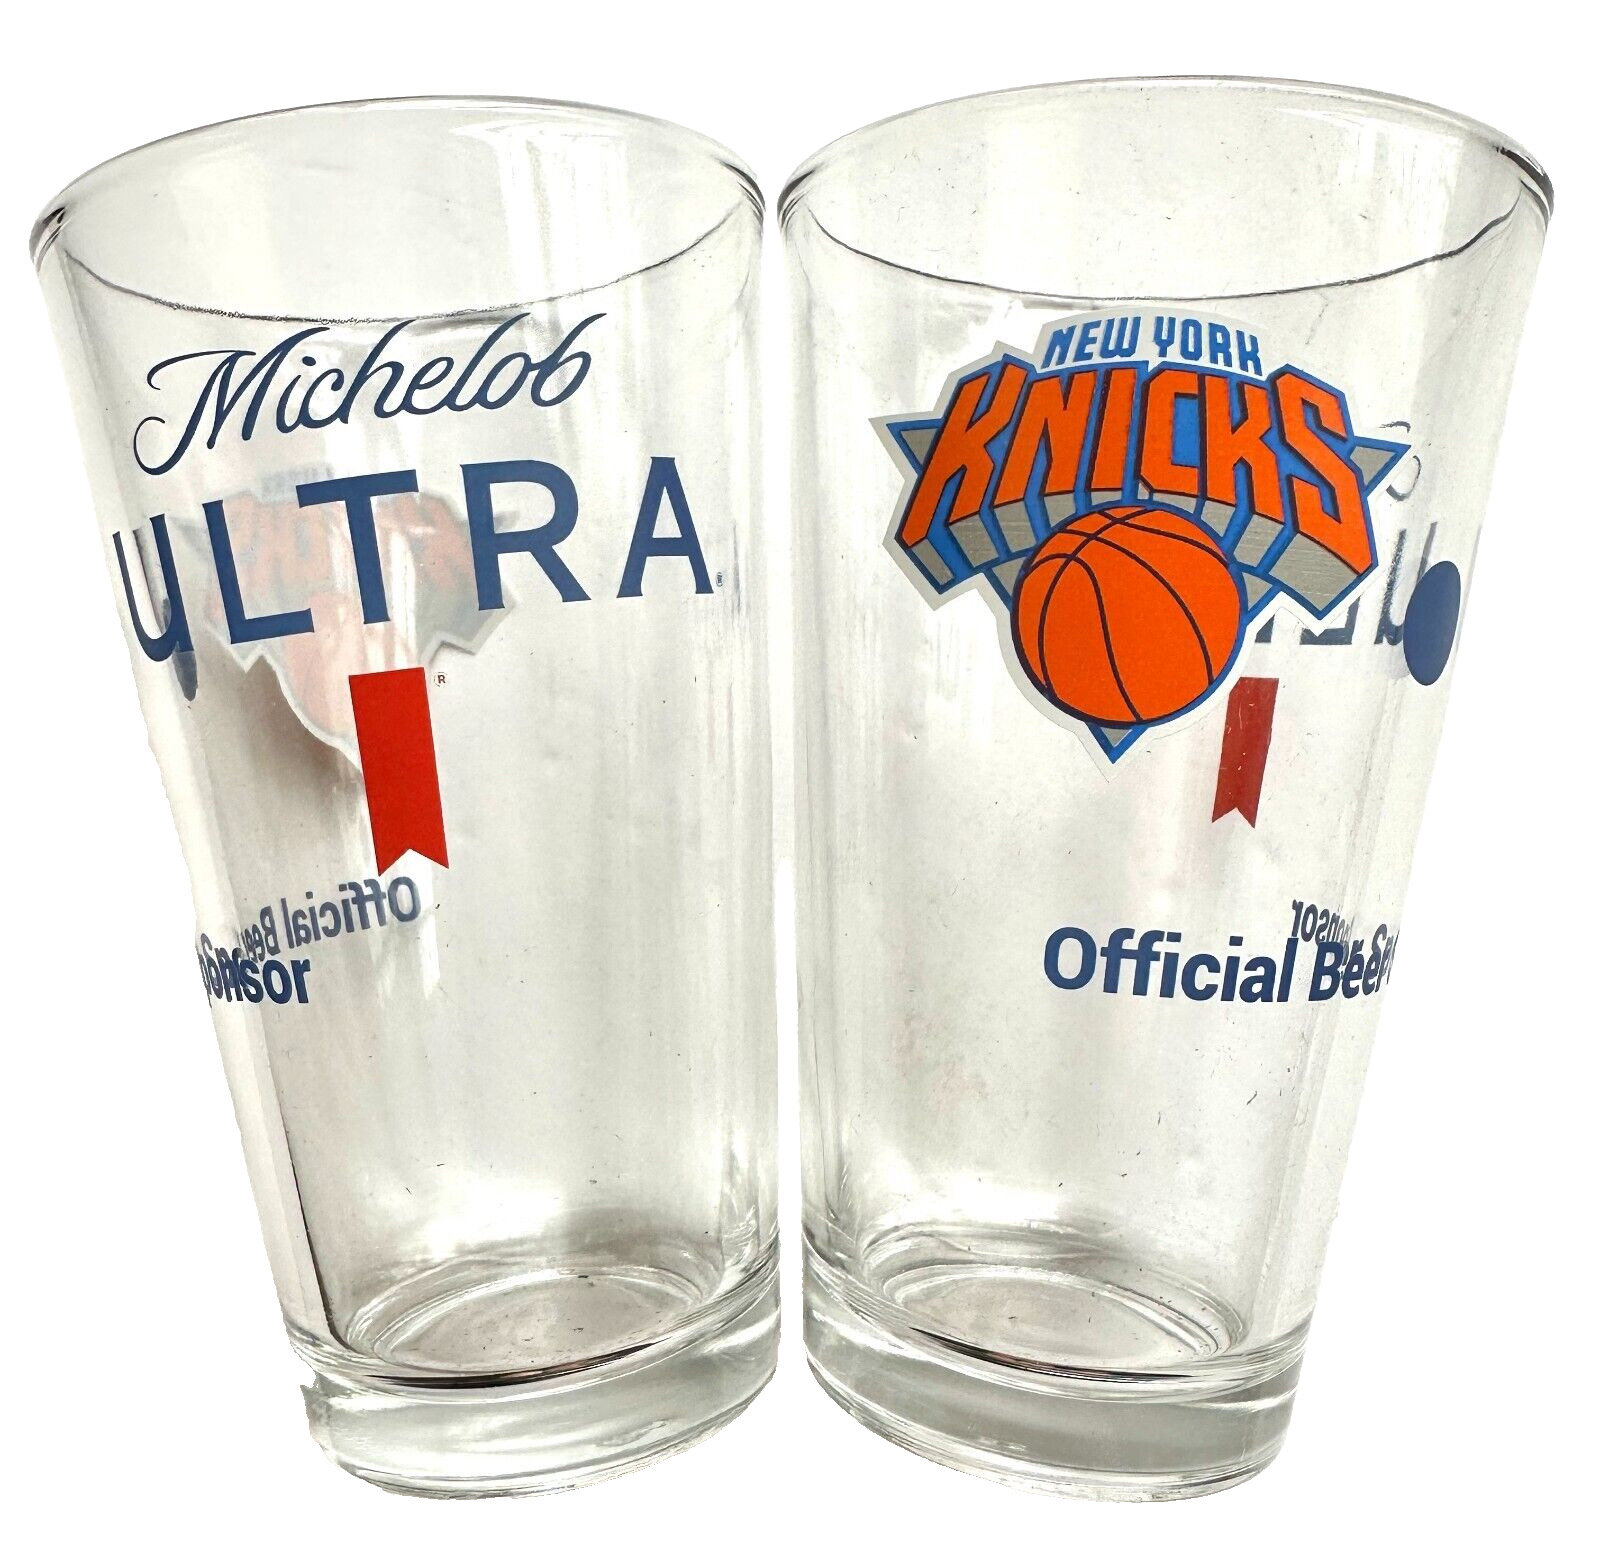 *NEW* MICHELOB ULTRA - NEW YORK KNICKS - NBA - 16 oz BEER PINT GLASS